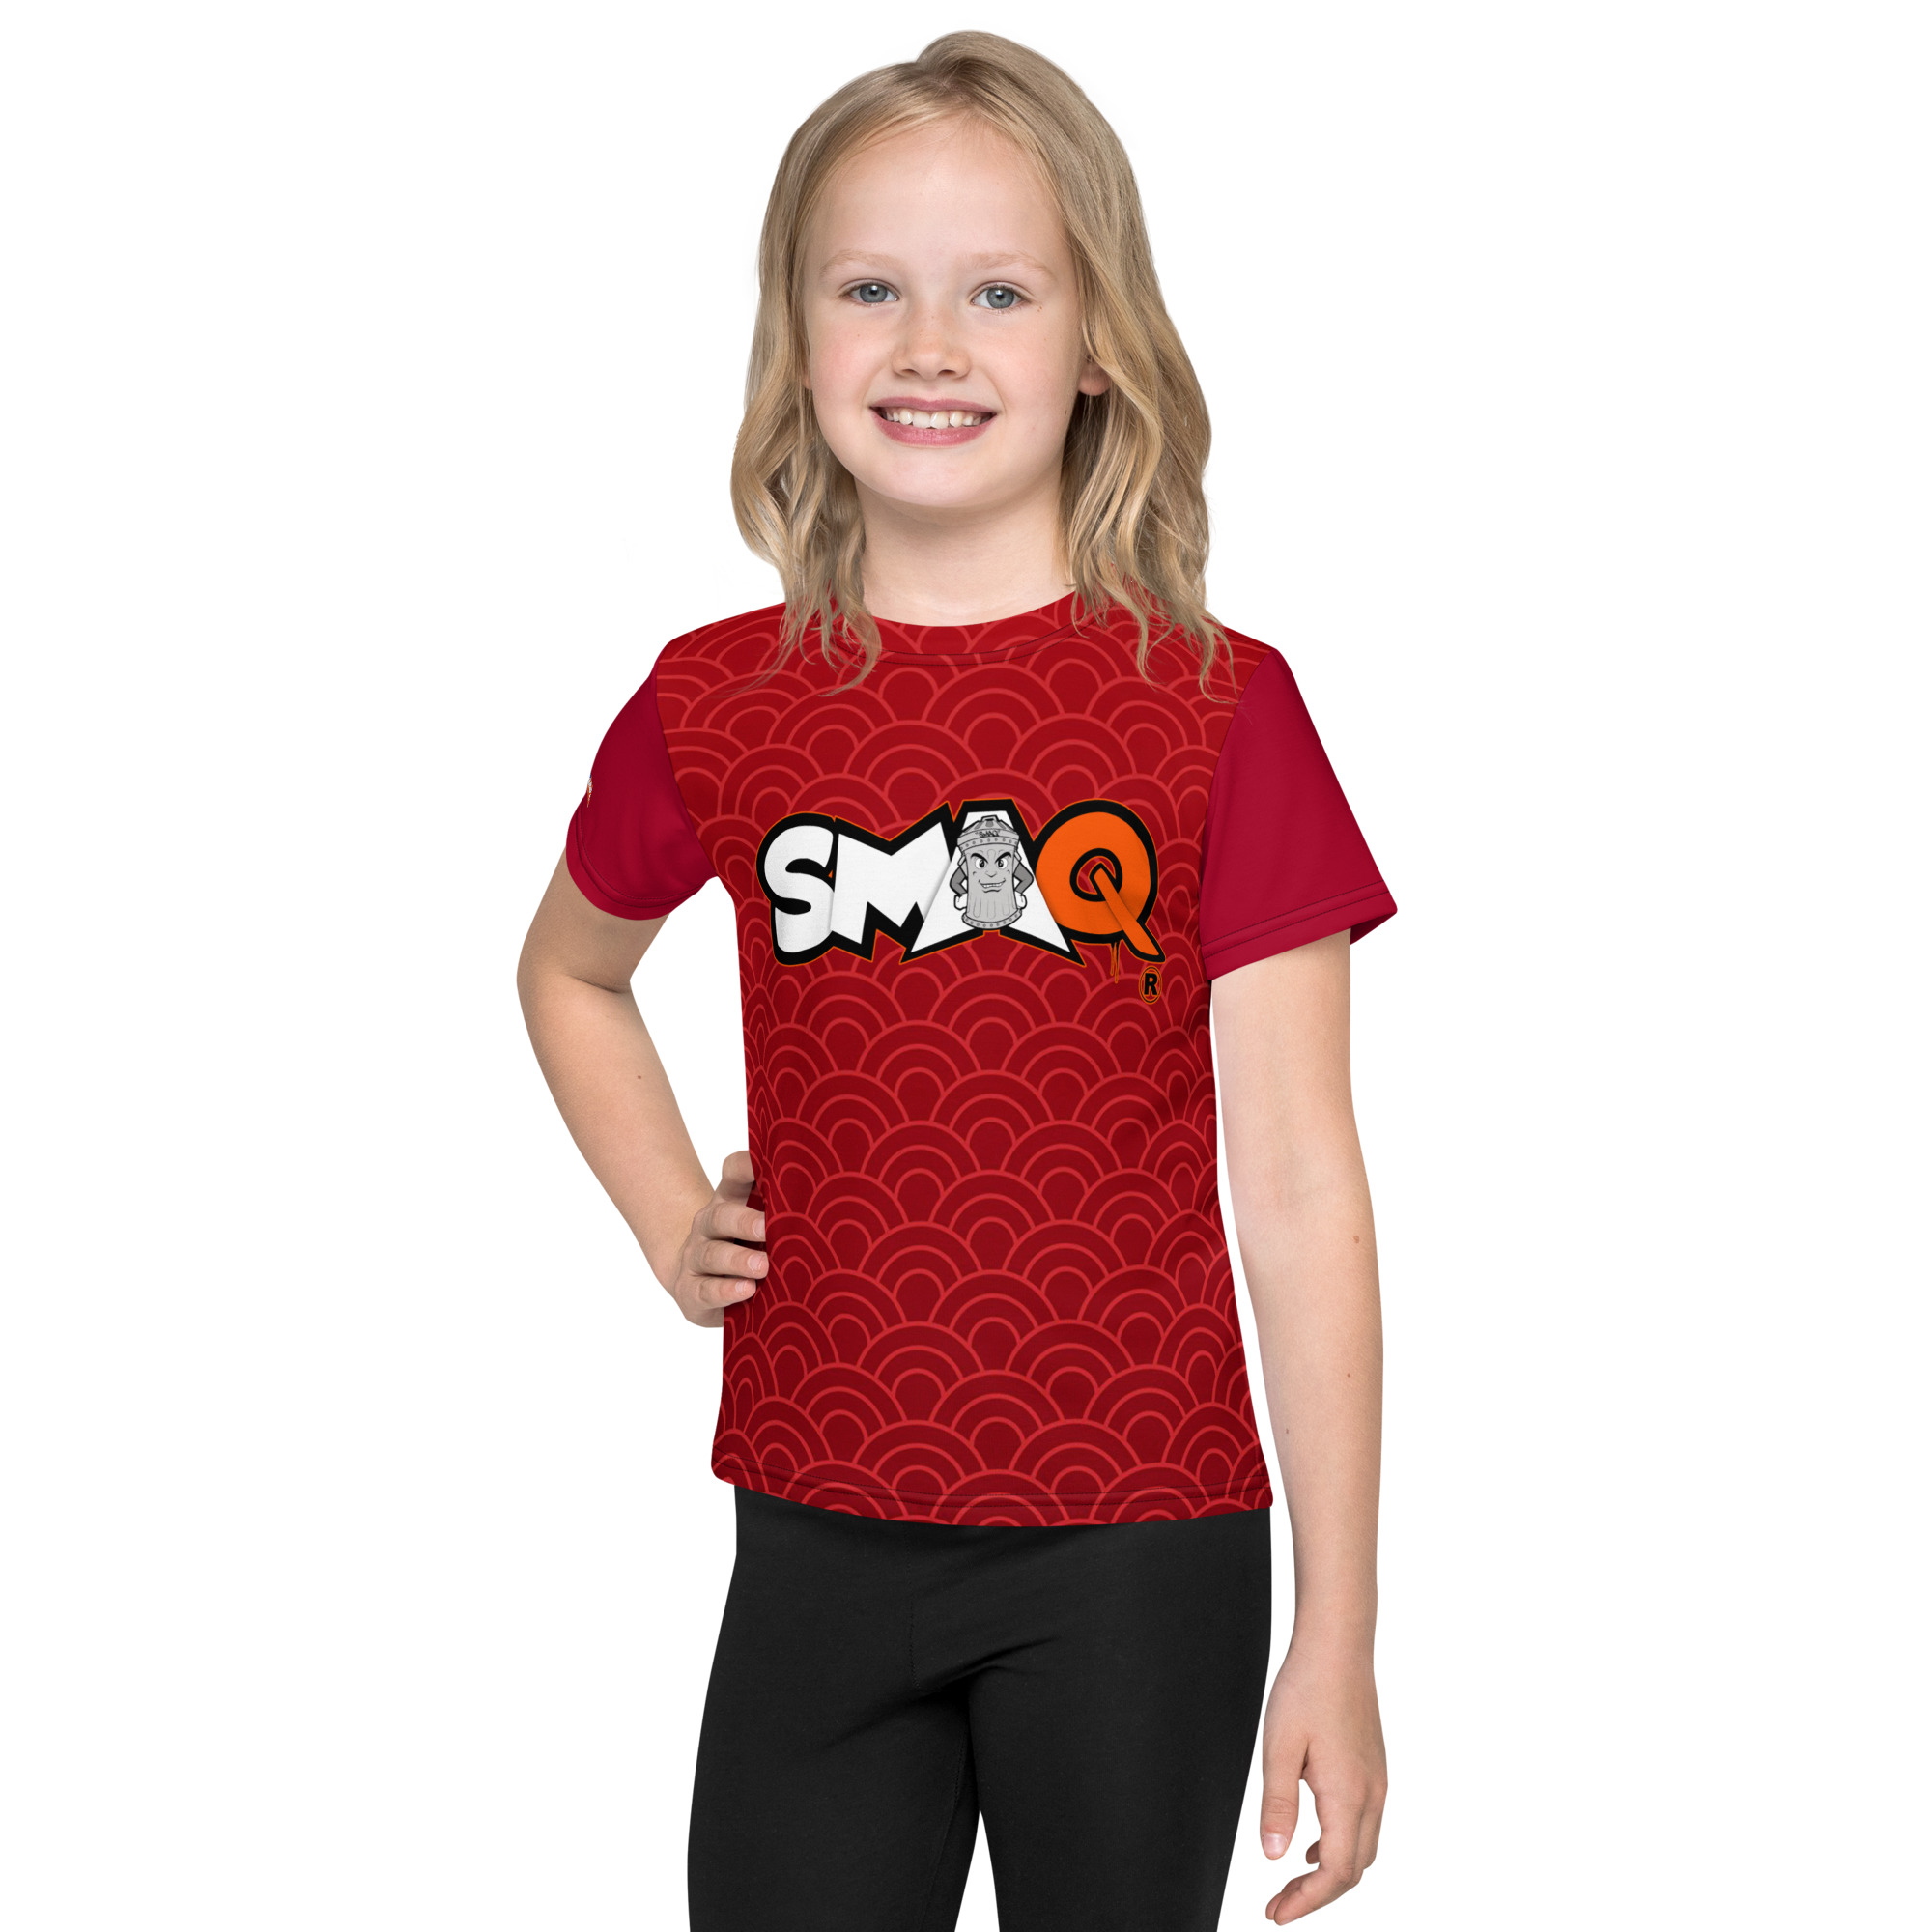 SMAQ Red Blossom Graffiti Kids crew neck t-shirt